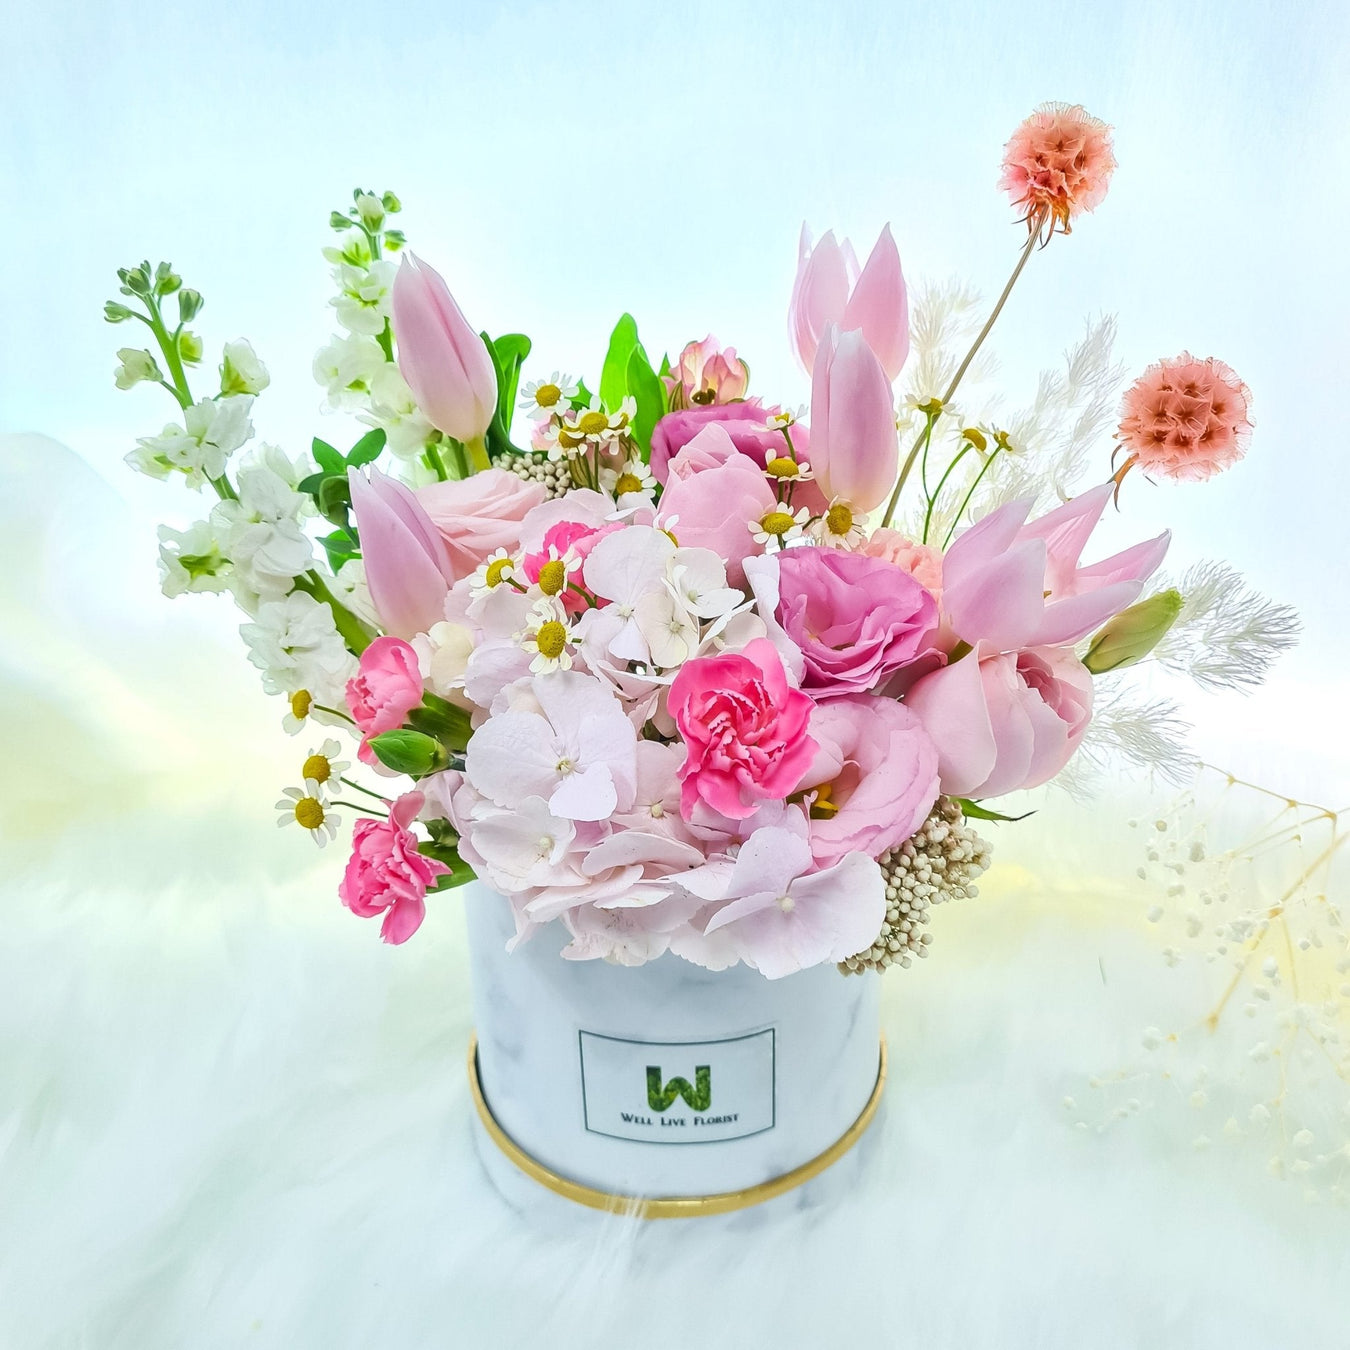 Flower Box, Flower in box, fresh flower, preserved flower, flower delivery Singapore, Florist Singapore, Well Live Florist